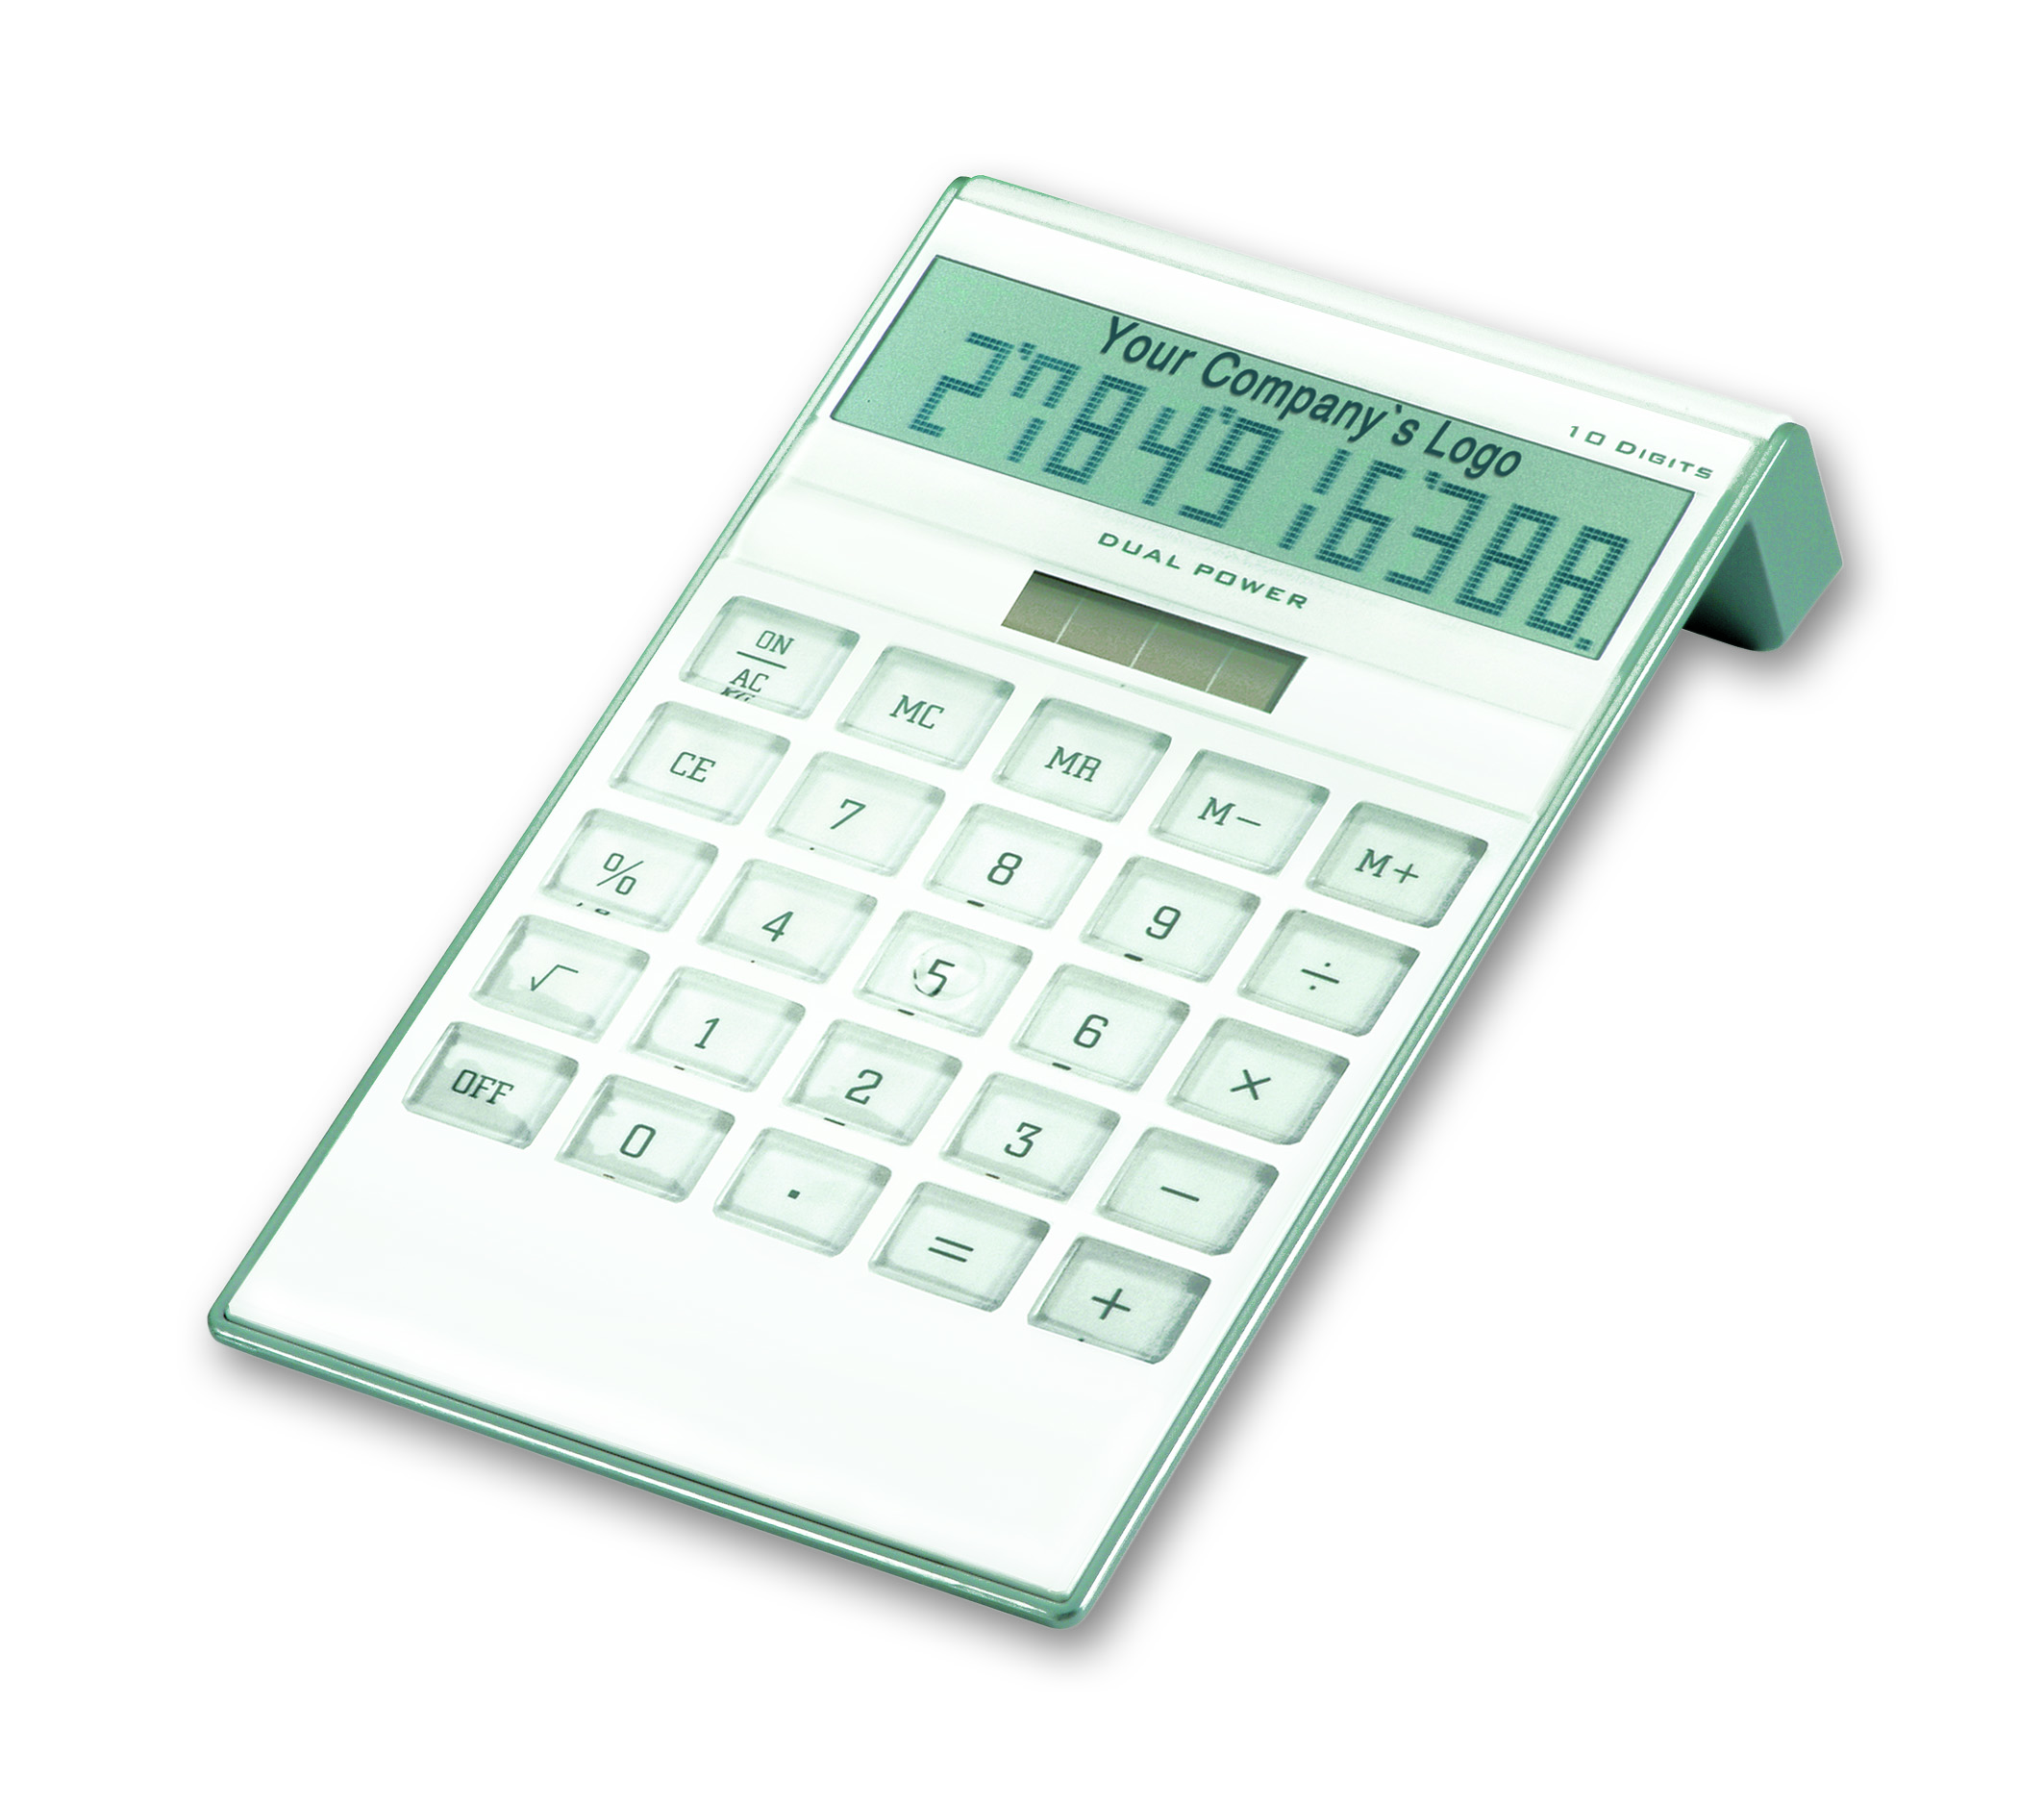 White dual-powered desk calculator